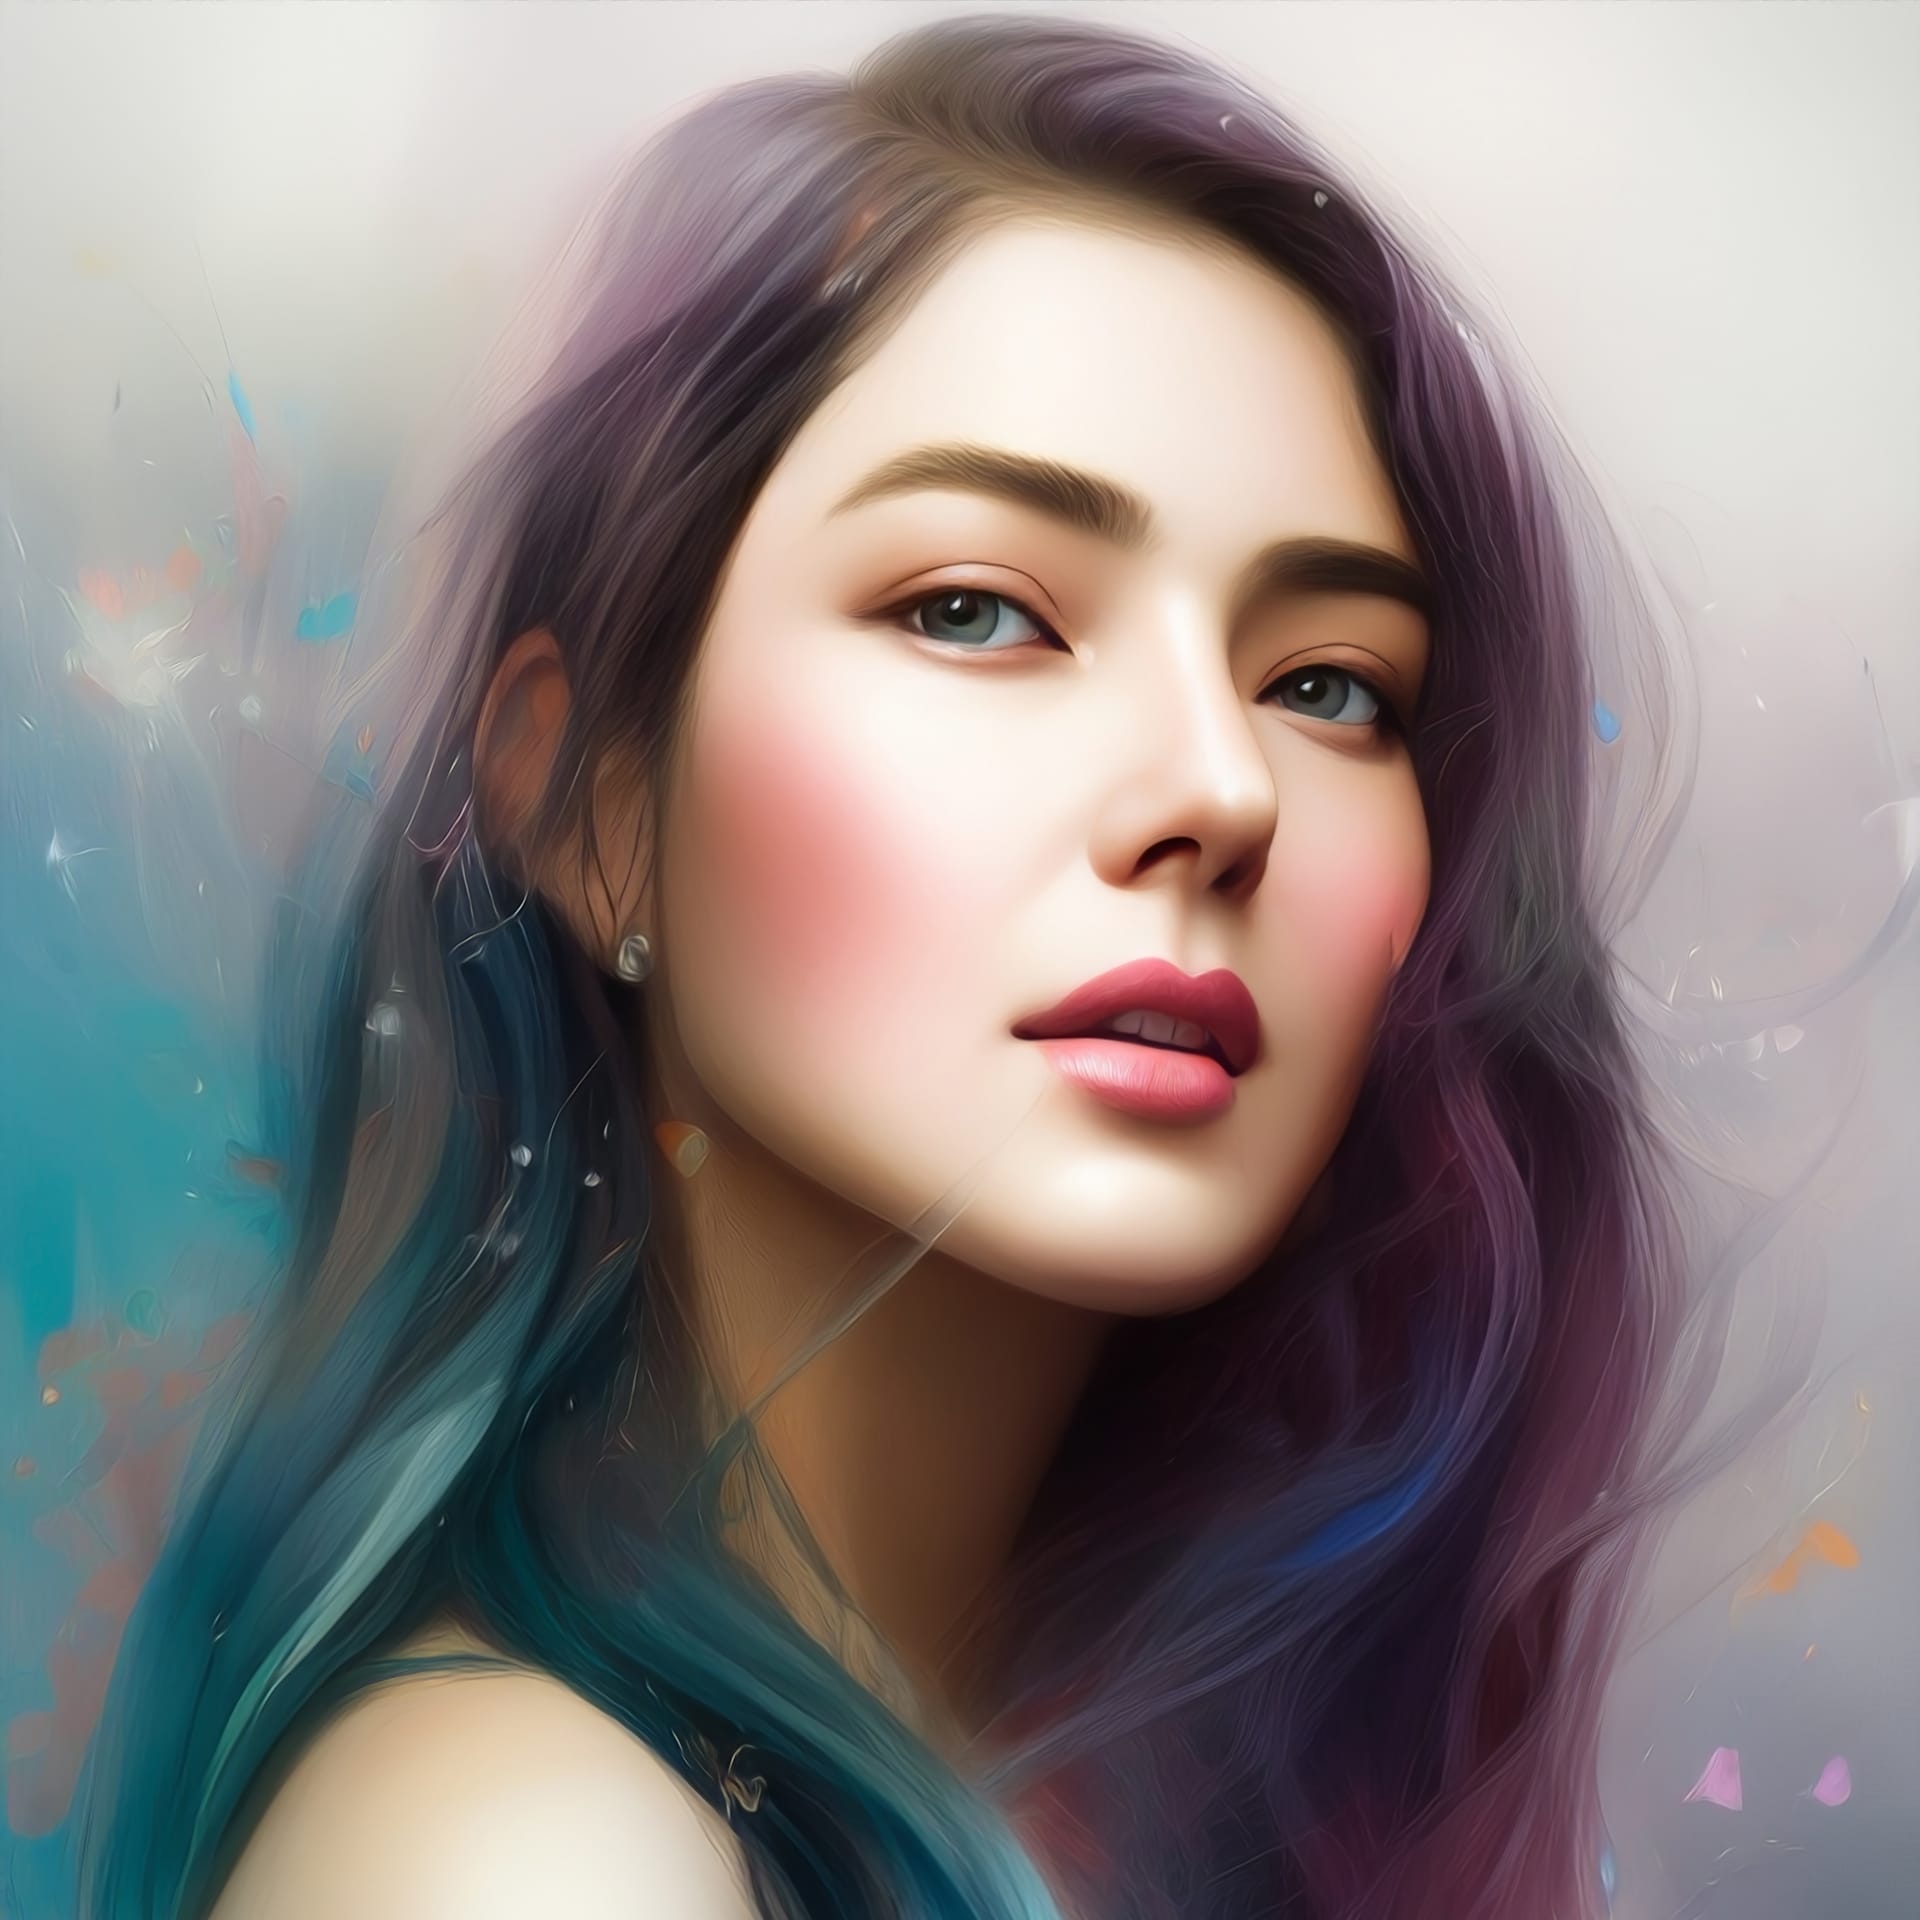 Colorful digital painting beautiful woman s portrait